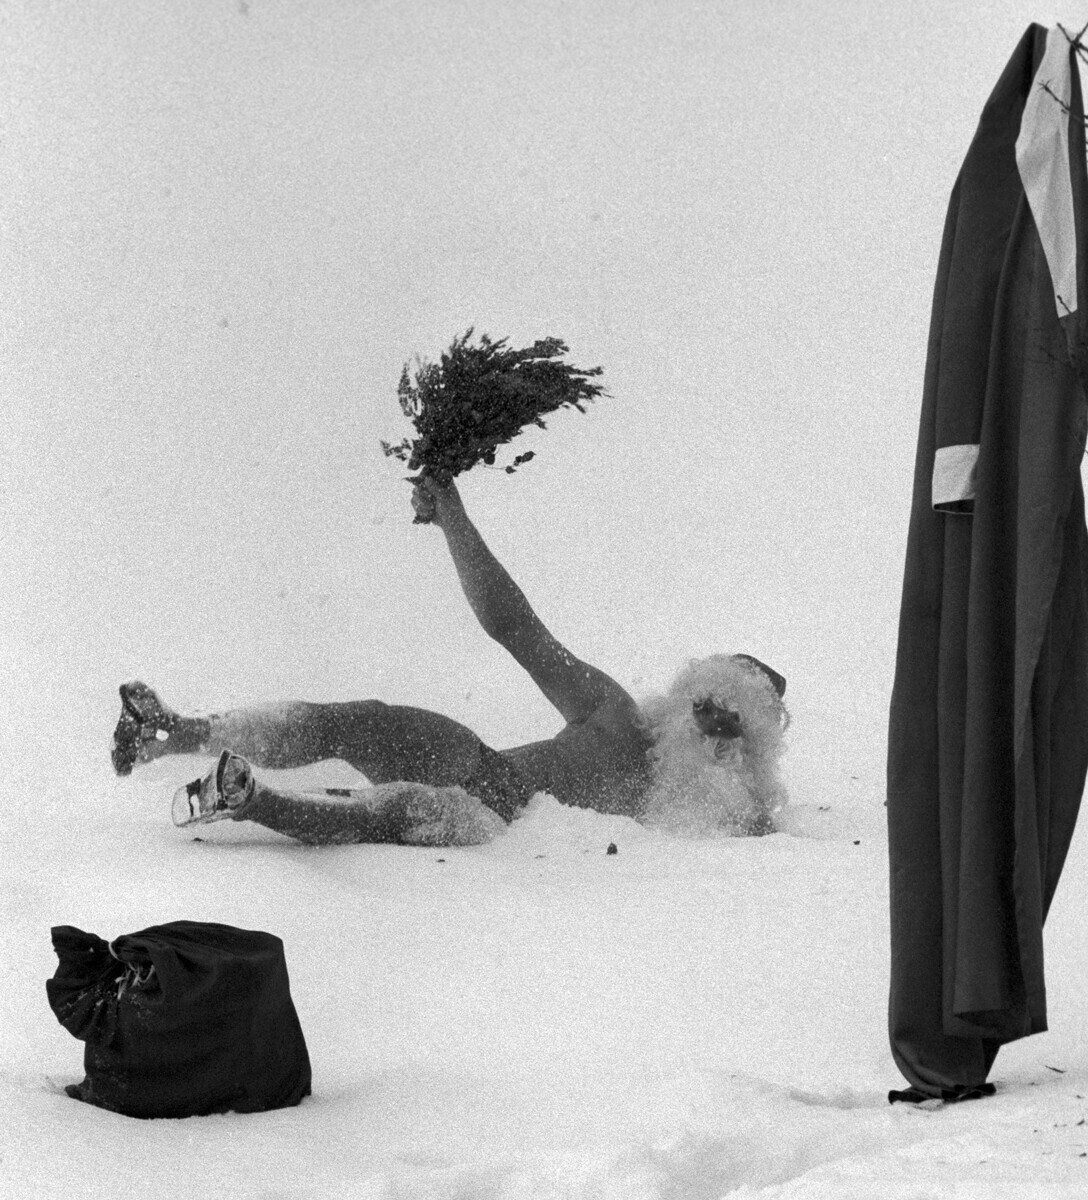 Дедо Мраз во снег по парна бања („бања“). Московска област 1985.

